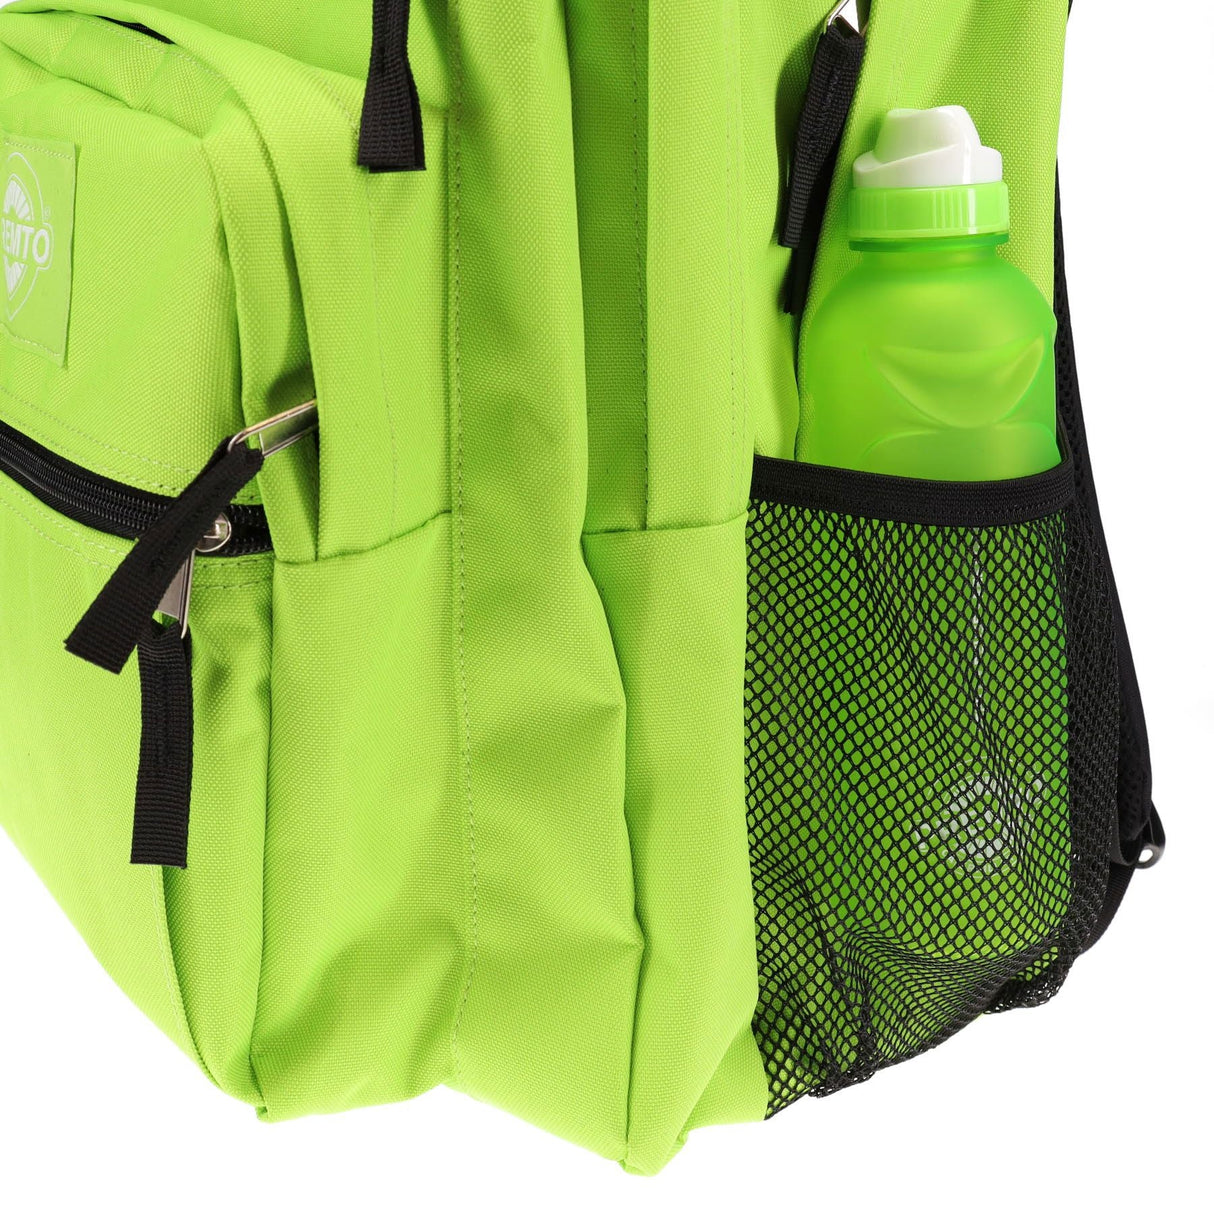 Premto 34L Backpack - Caterpillar Green | Stationery Shop UK